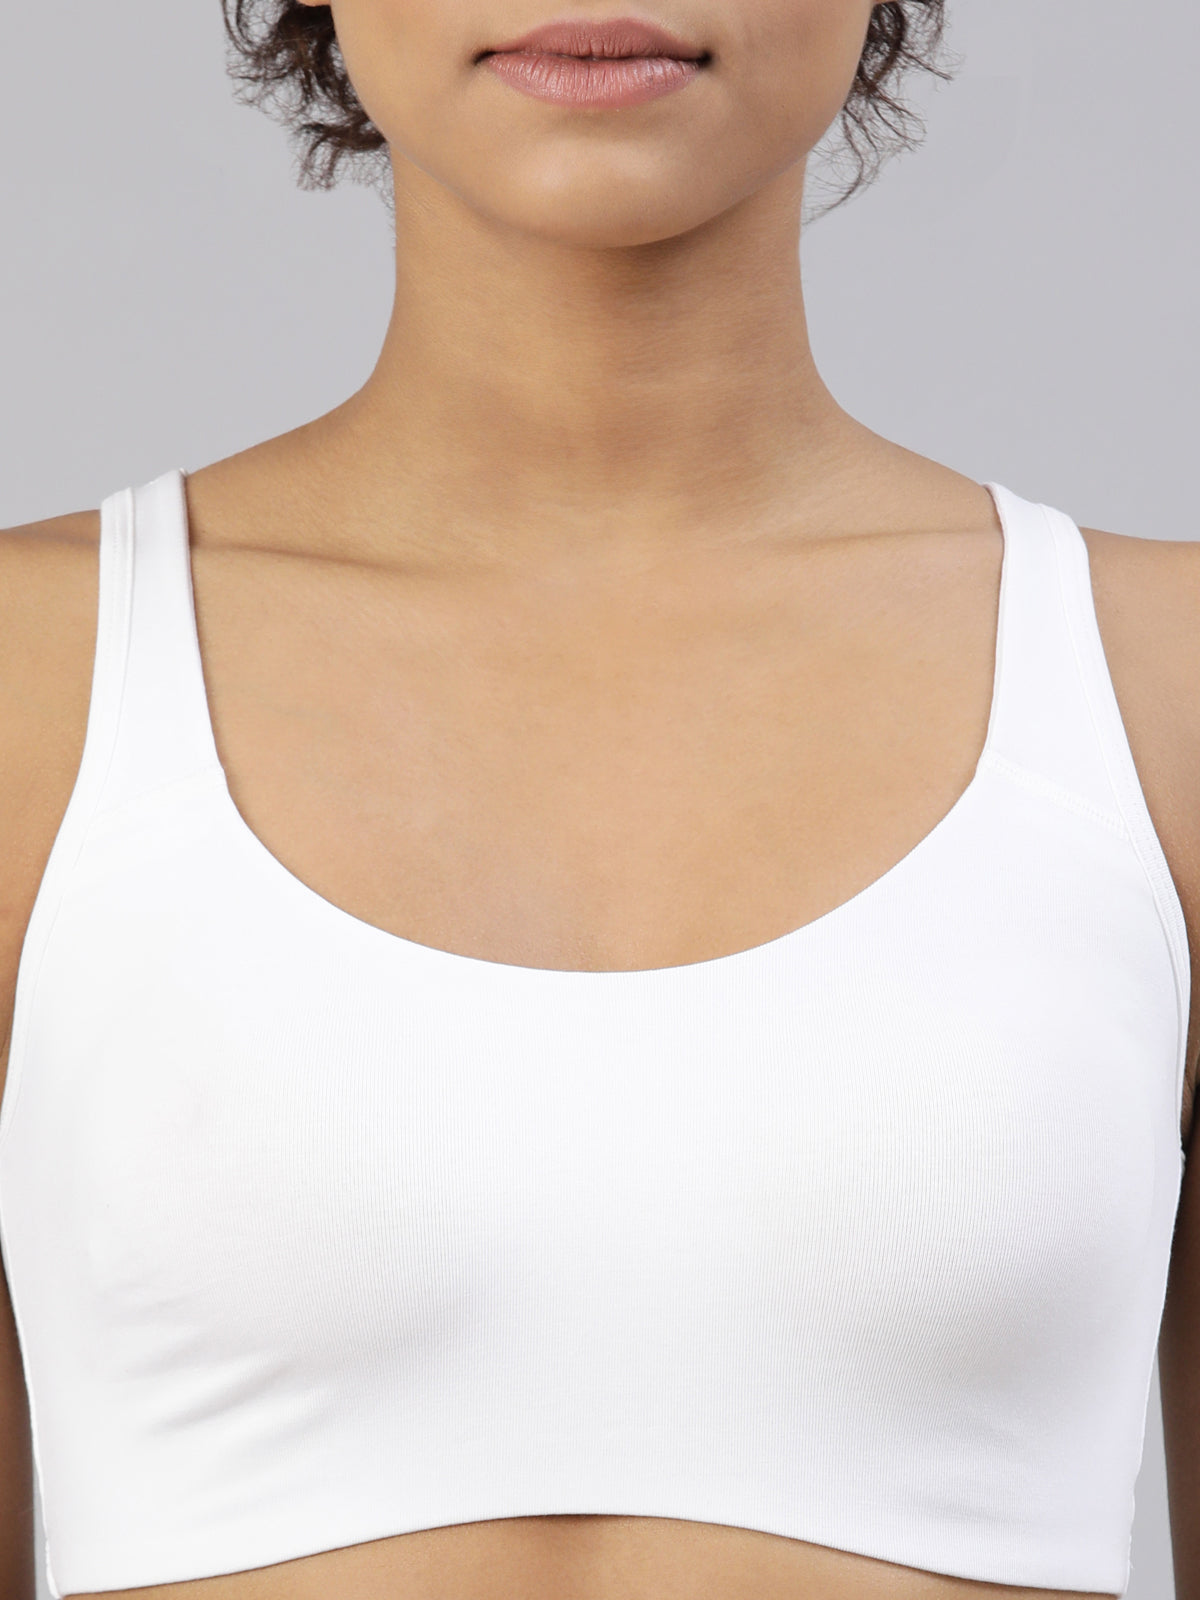 blossom-aesthetic bra-white2-anti microbial treated fabric-everyday bra